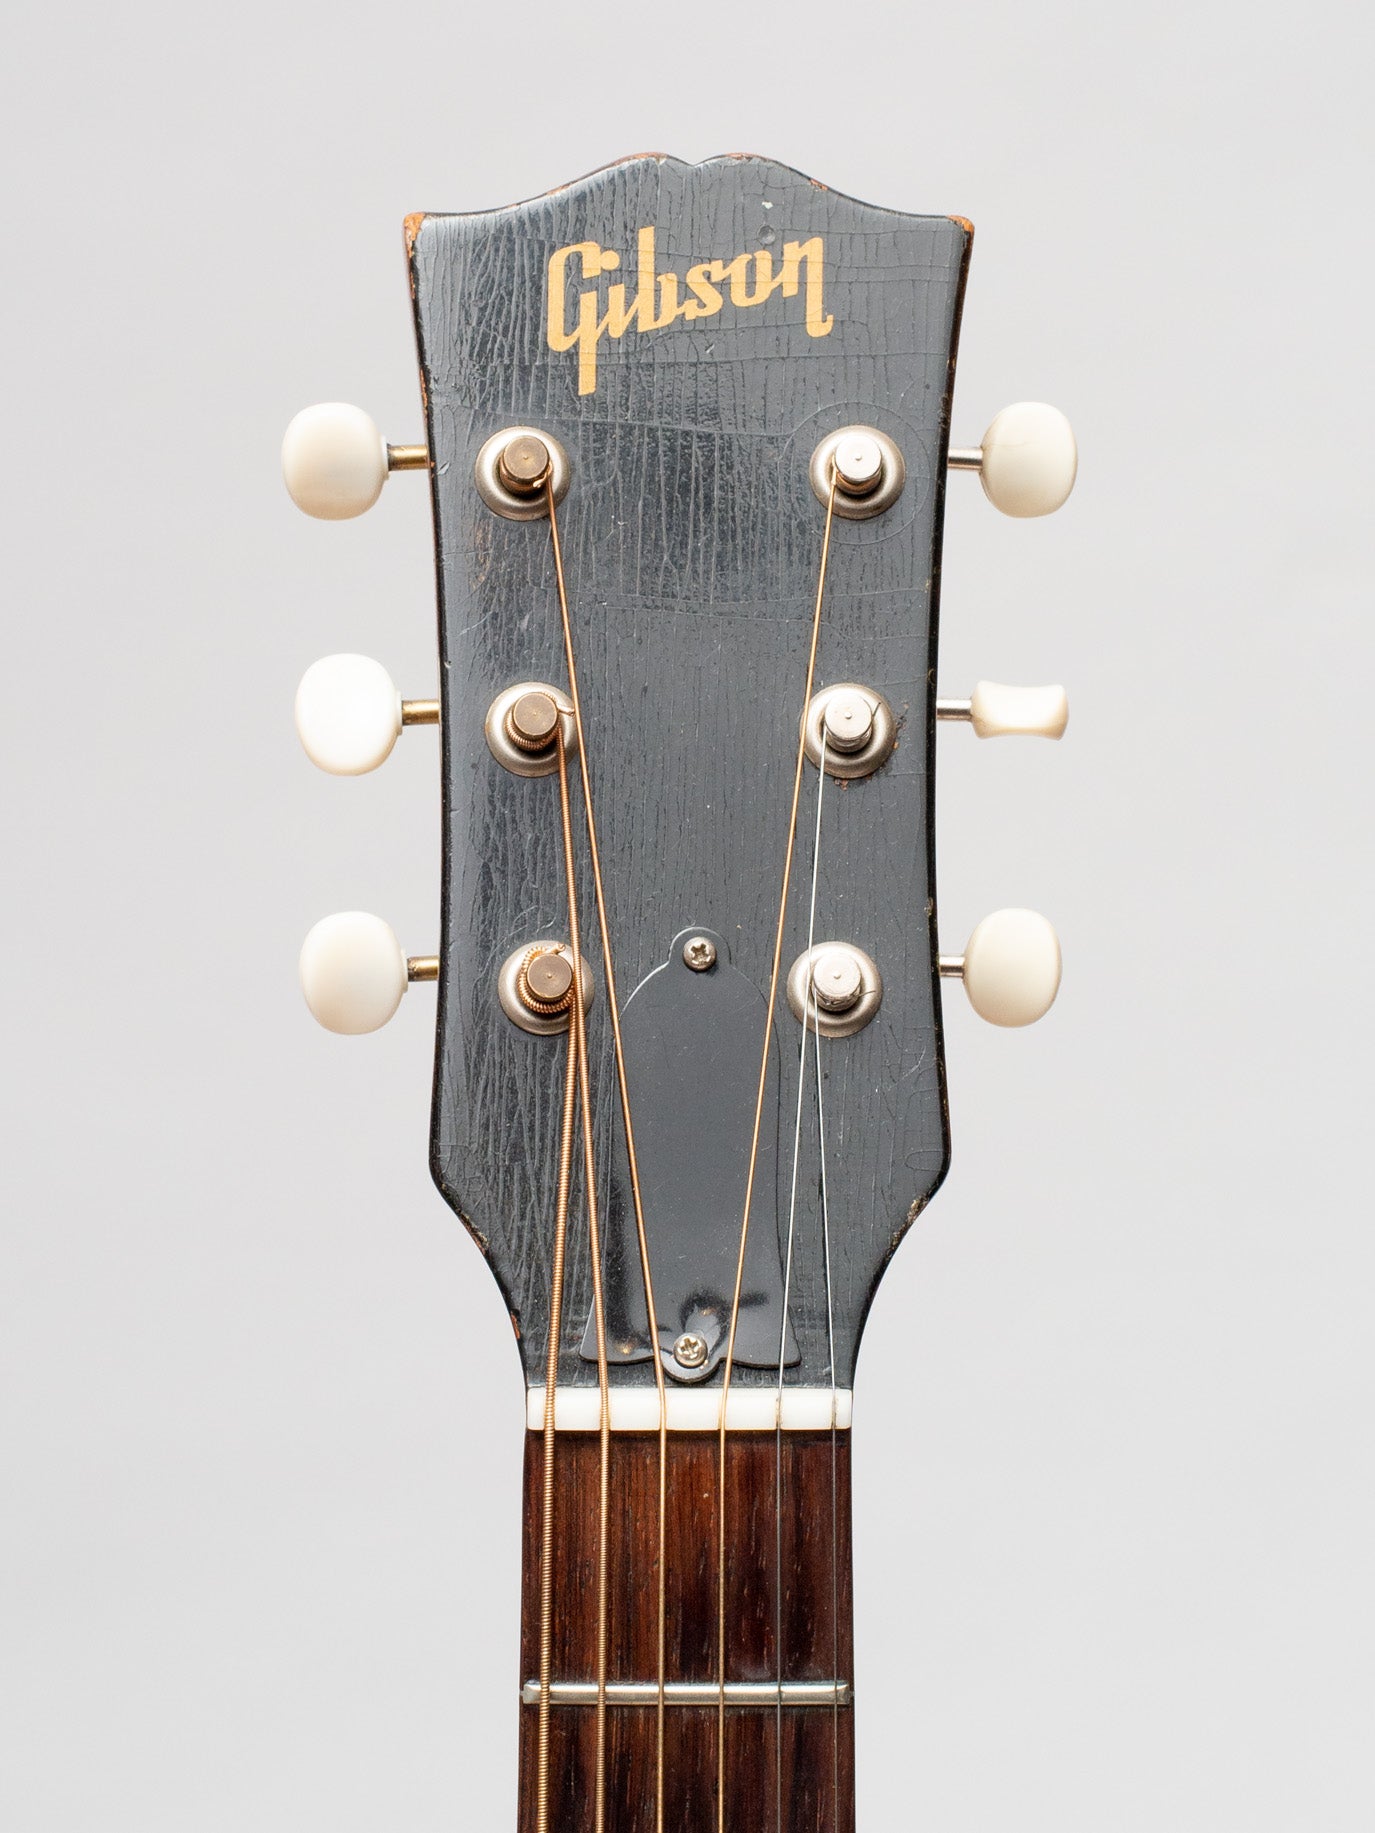 1960 Gibson LG-3